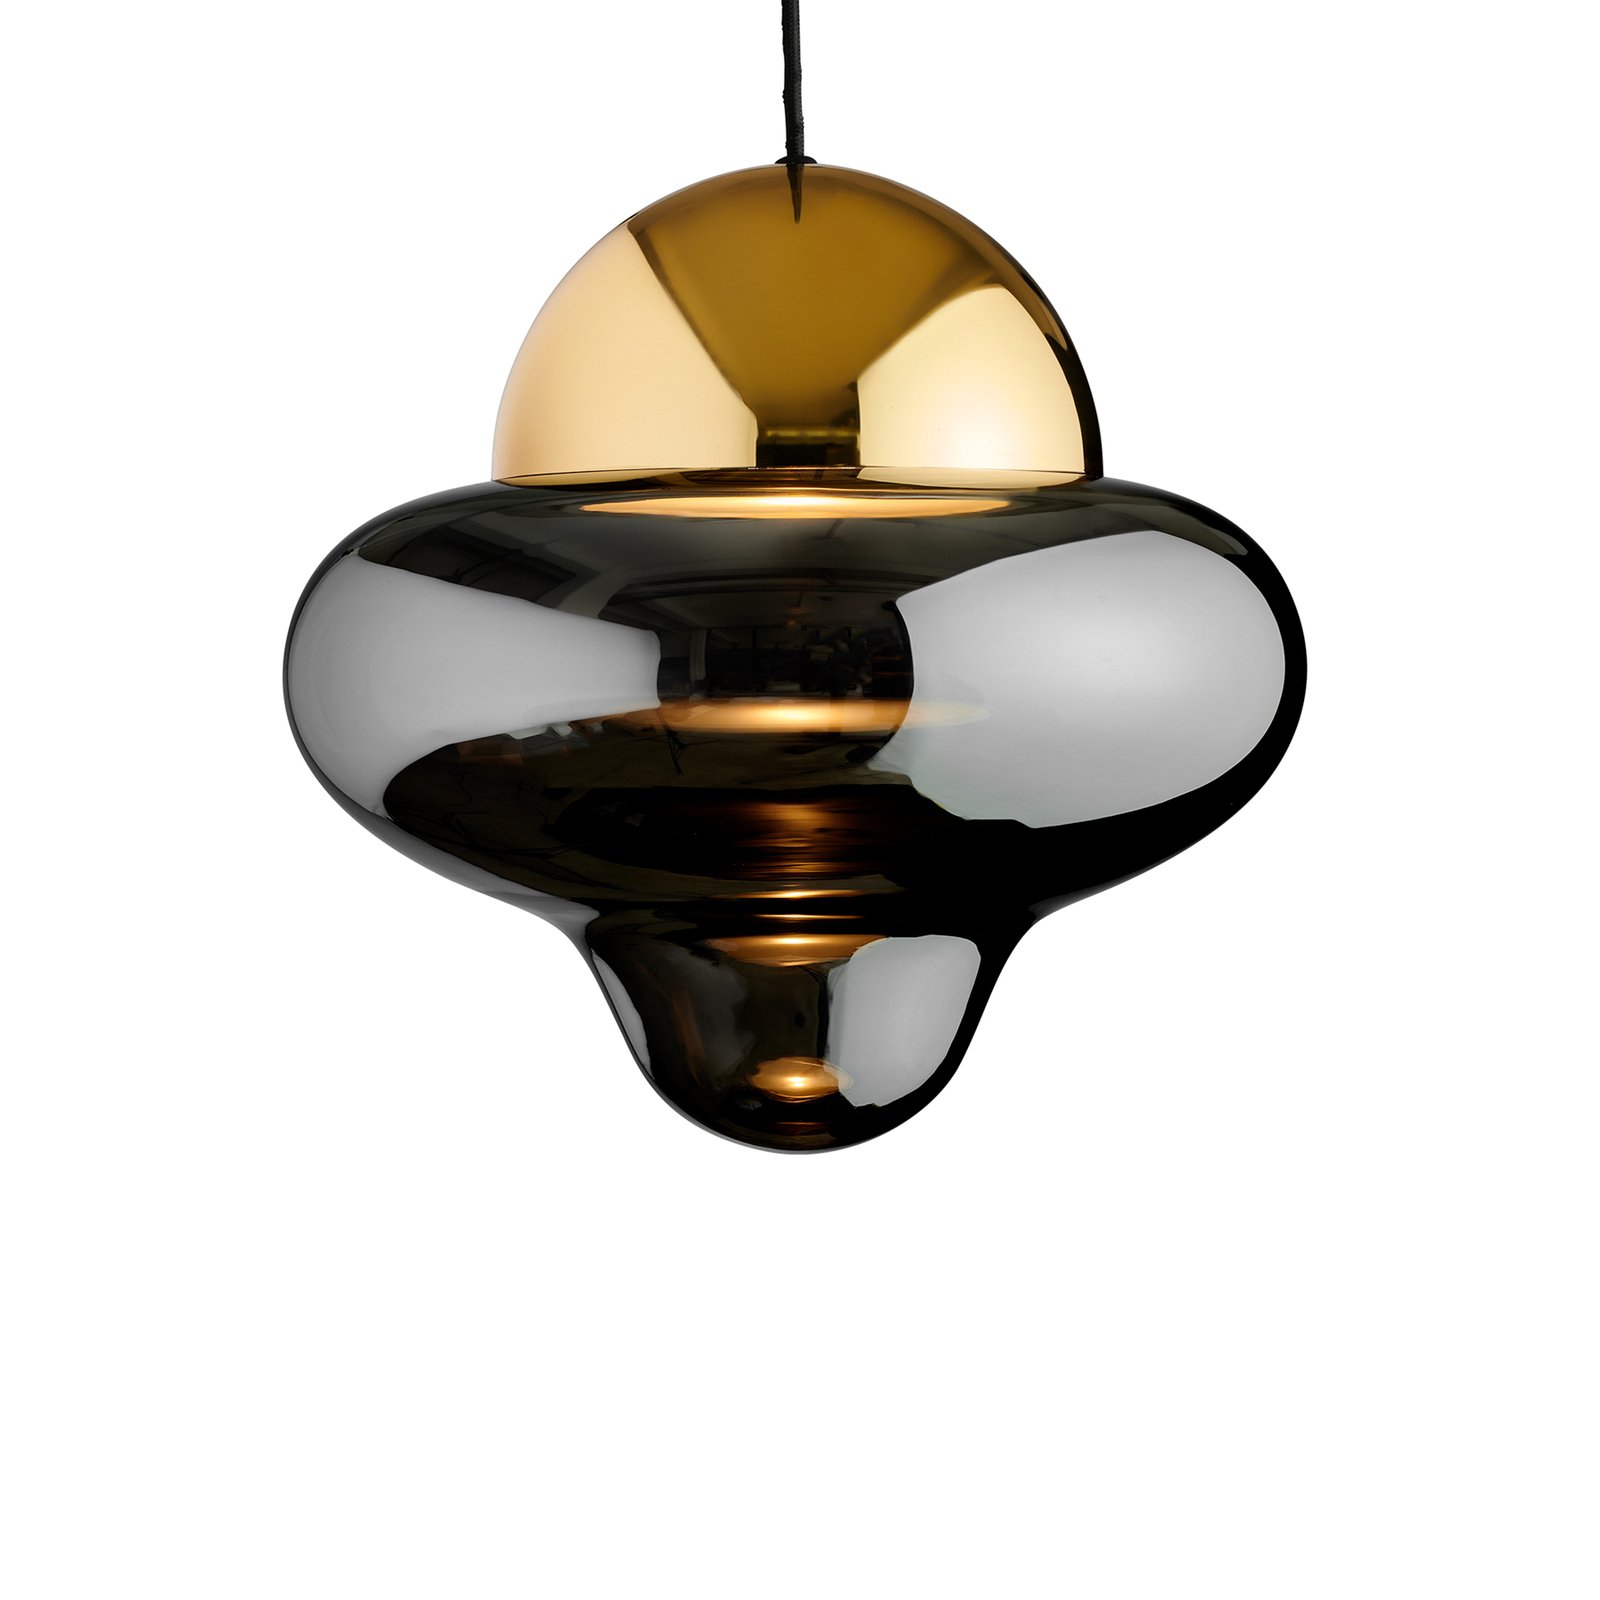 LED pendant light Nutty XL, smoke grey / gold-coloured, Ø 30 cm